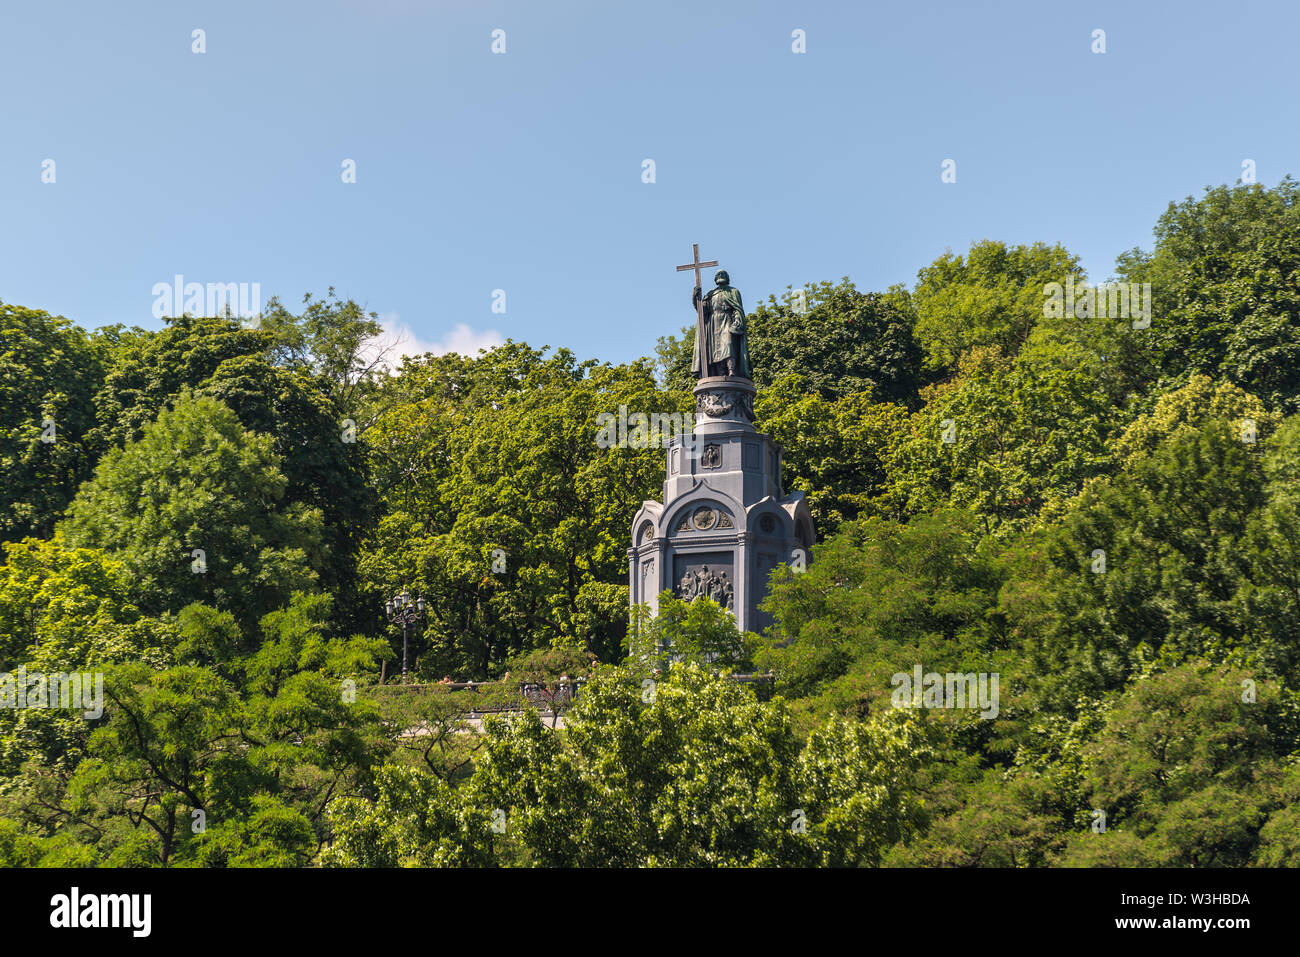 Kiew, Ukraine - Juli 13, 2019: Blick auf das Denkmal des hl. Wladimir, der Täufer der Kiewskaja Rus, 1853 (Vladimir der Täufer). Stockfoto